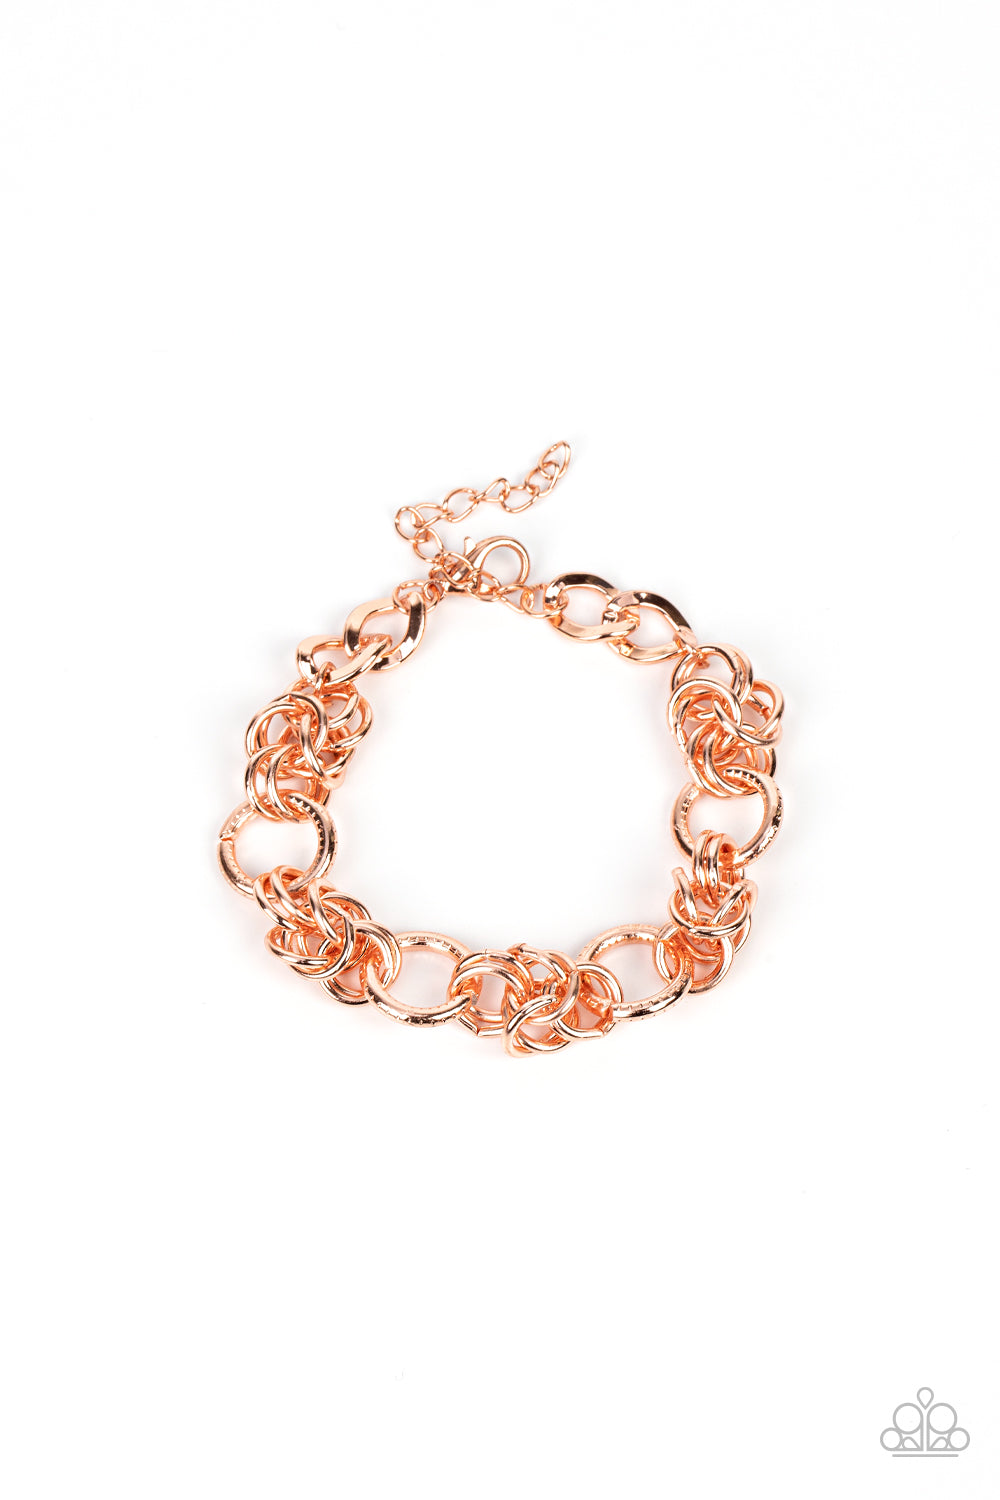 Big City Chic - Copper Mismatched Interlocking Link Paparazzi Adjustable Bracelet